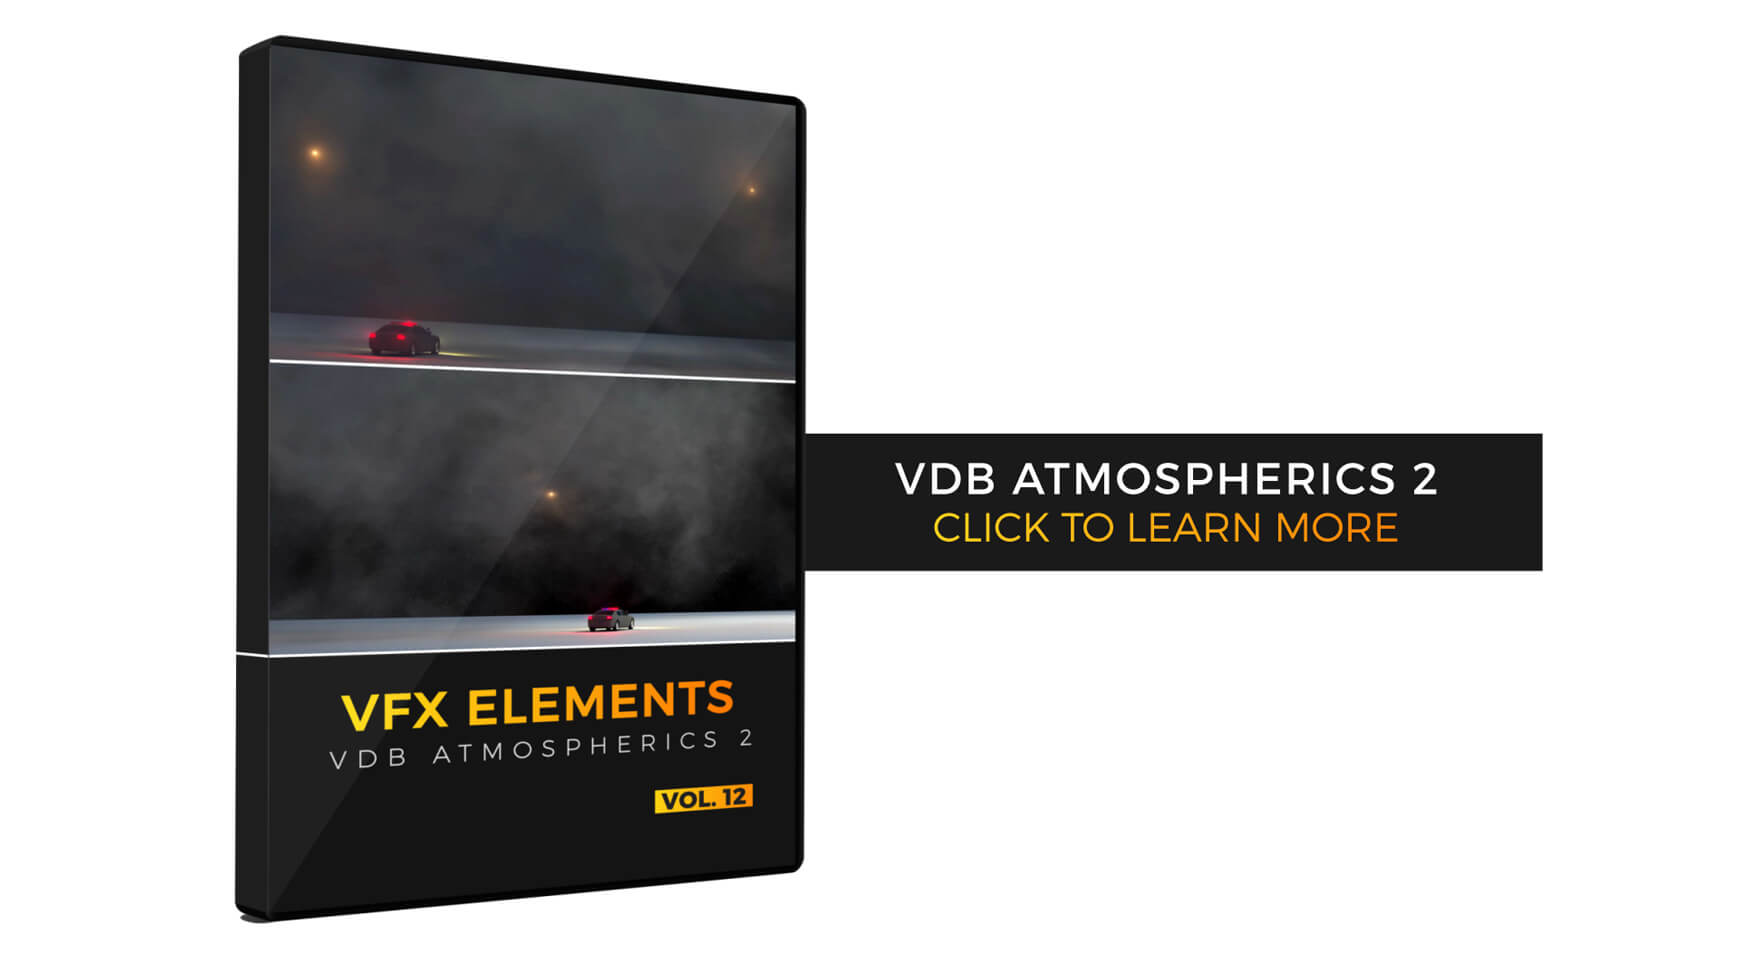 VFX Elements Volume 12 VDB Atmospherics 2